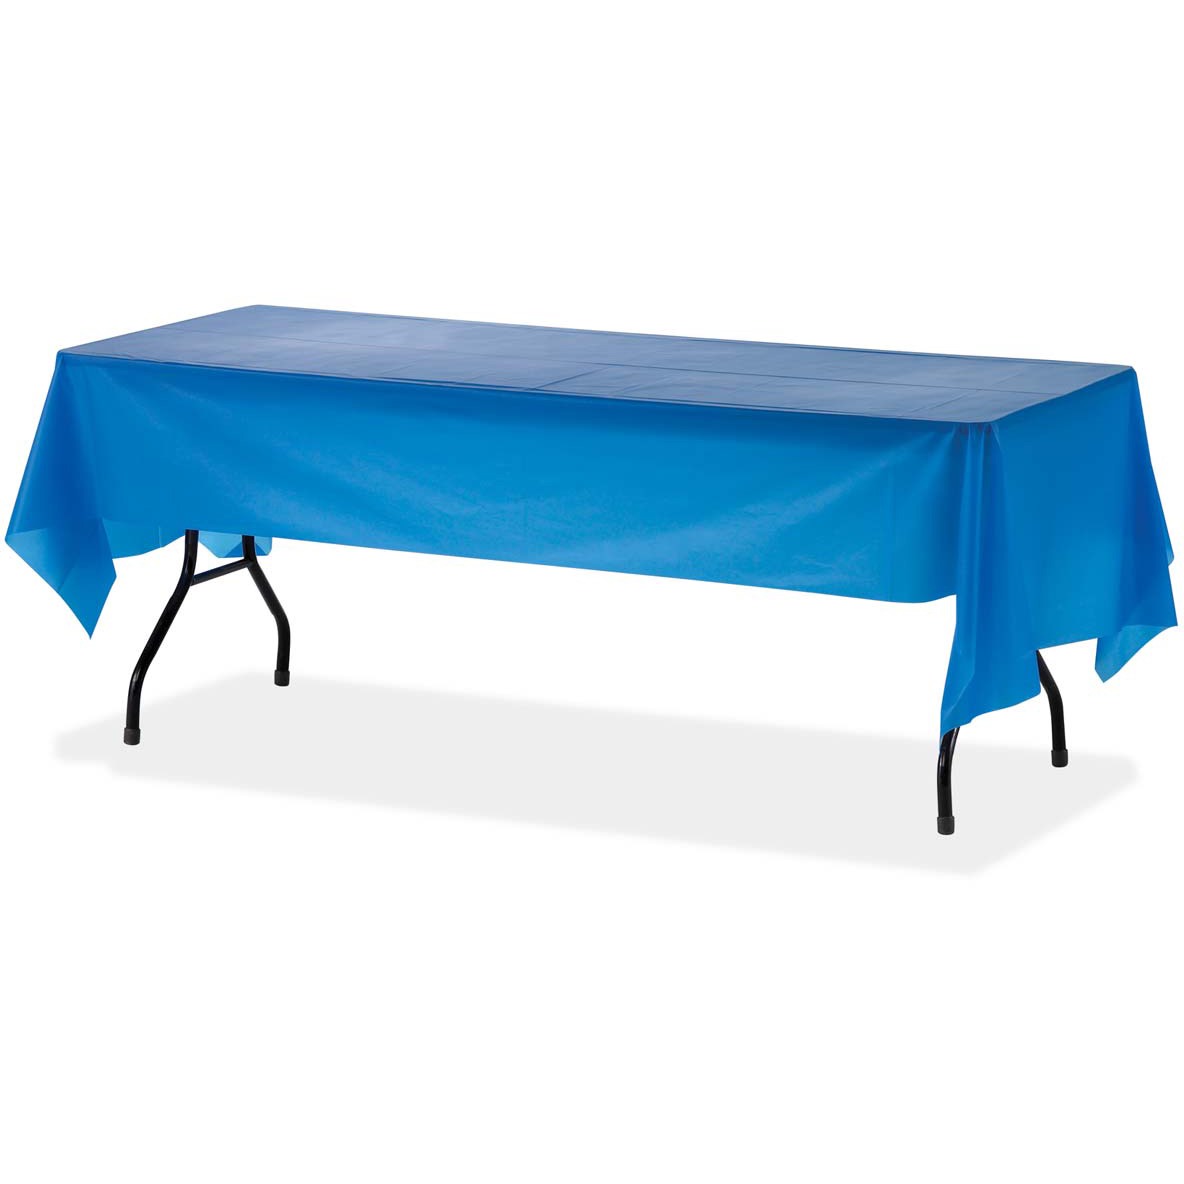 Genuine Joe GJO10325CT 54 x 108 in. Plastic Rectangular Table Covers - Blue